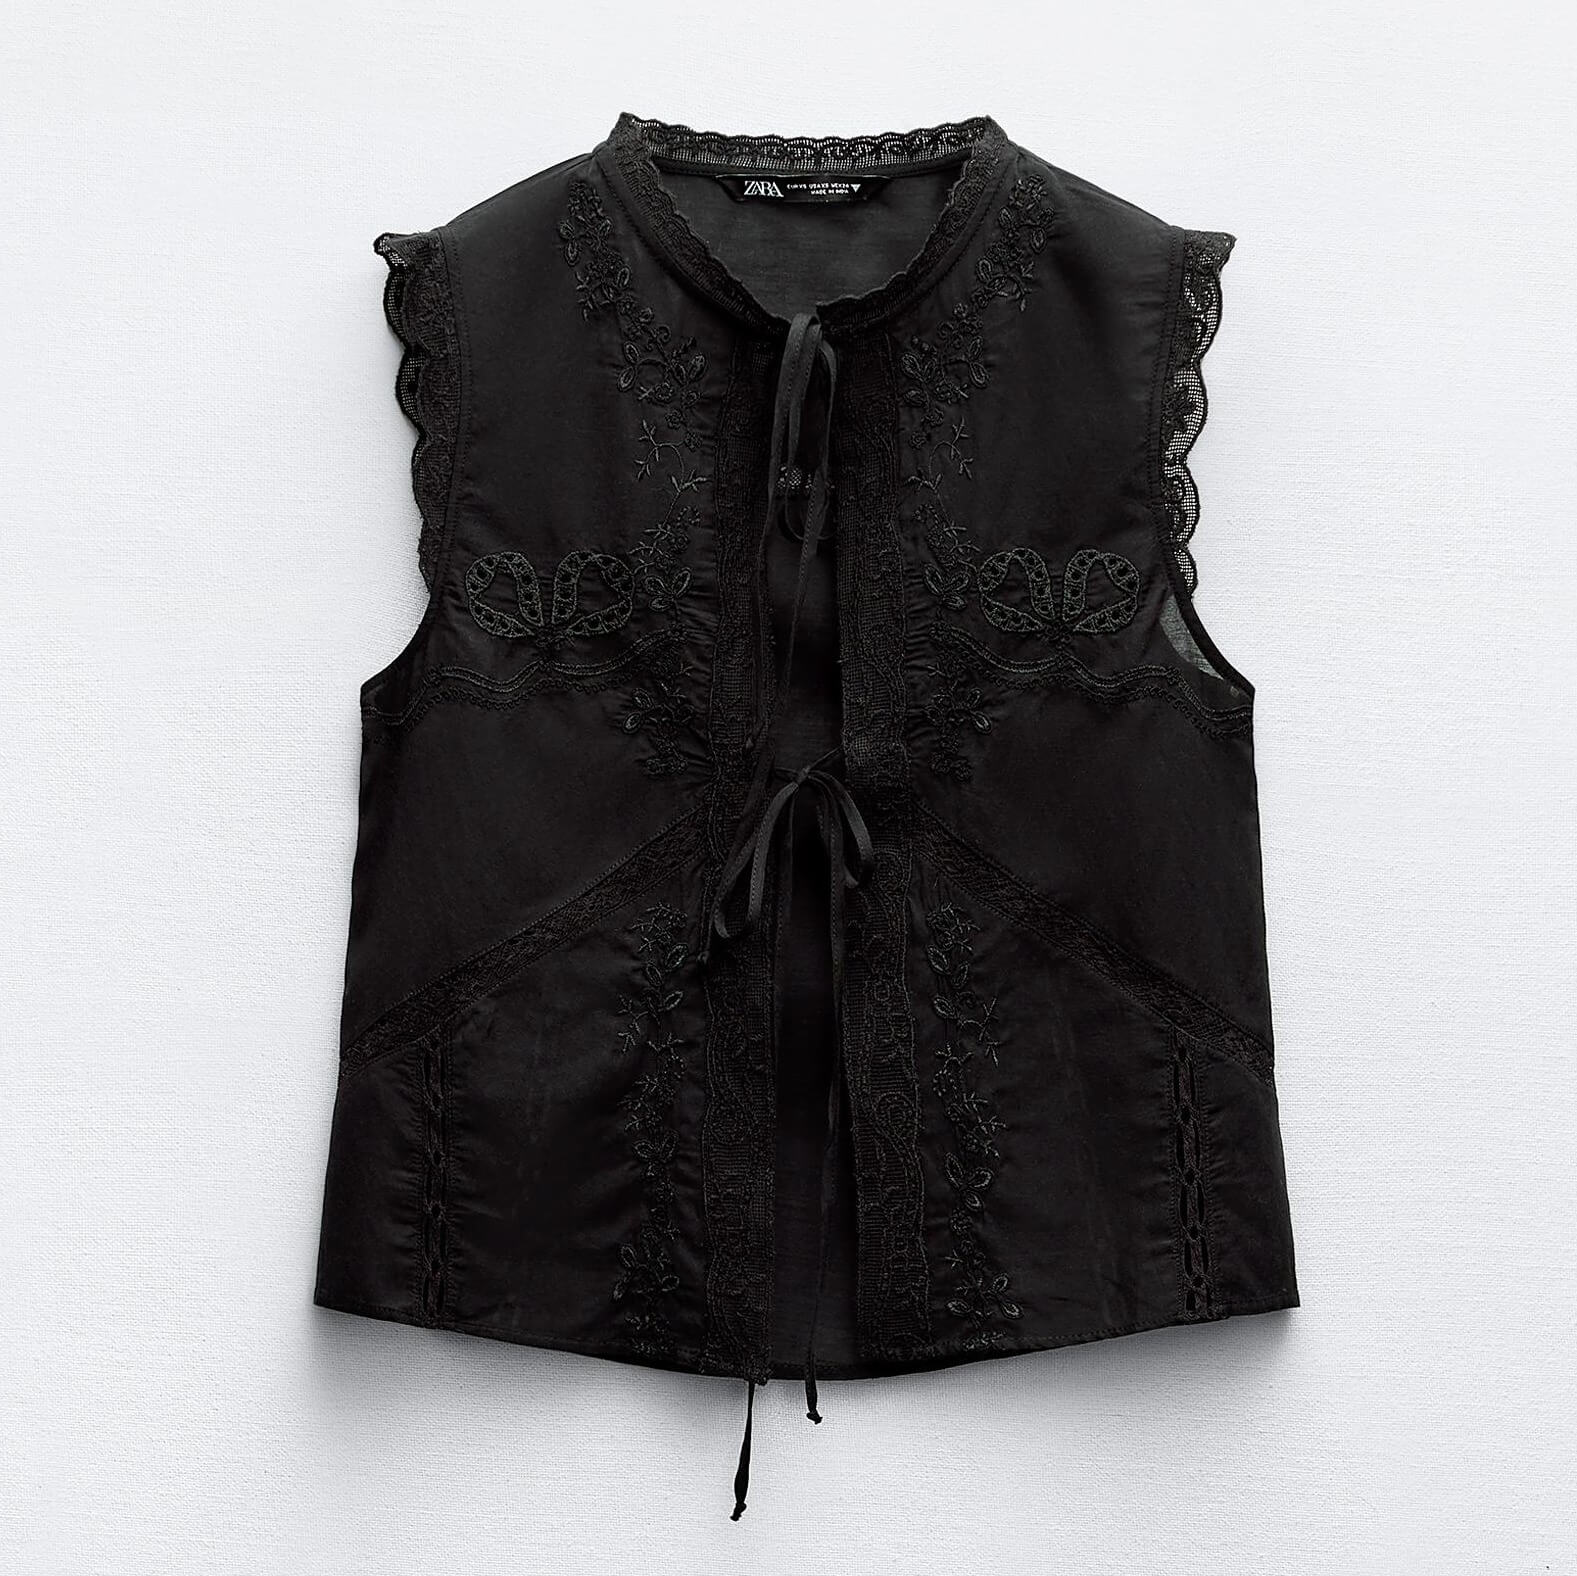 Топ Zara Embroidered With Ties, черный топ zara embroidered tulle черный